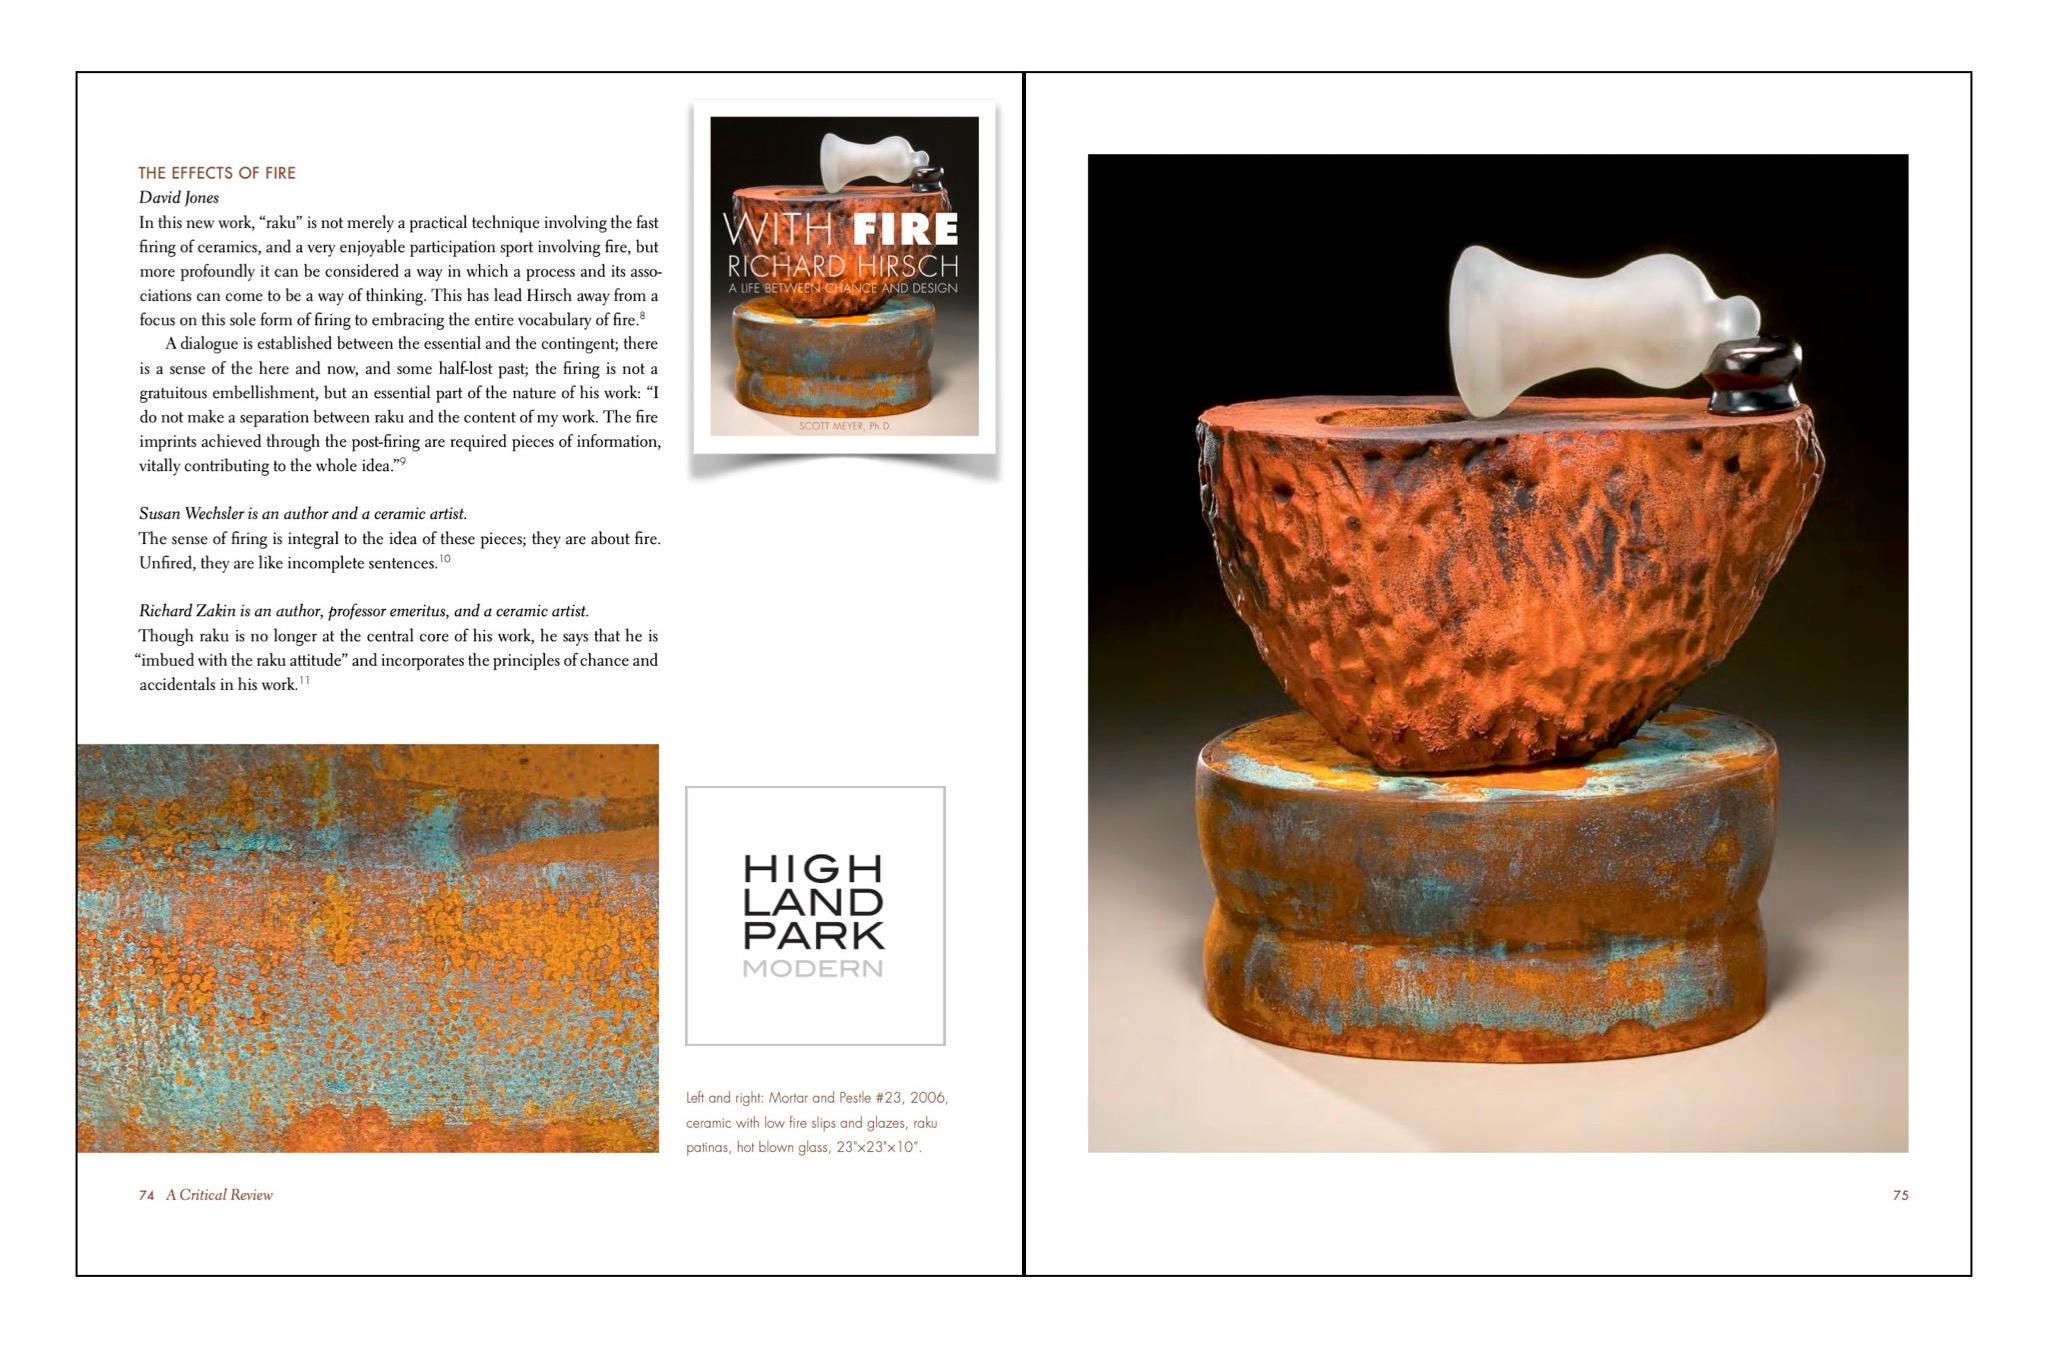 Richard Hirsch Ceramic Mortar and Blown Glass Pestle Sculpture #23, 2006 For Sale 2